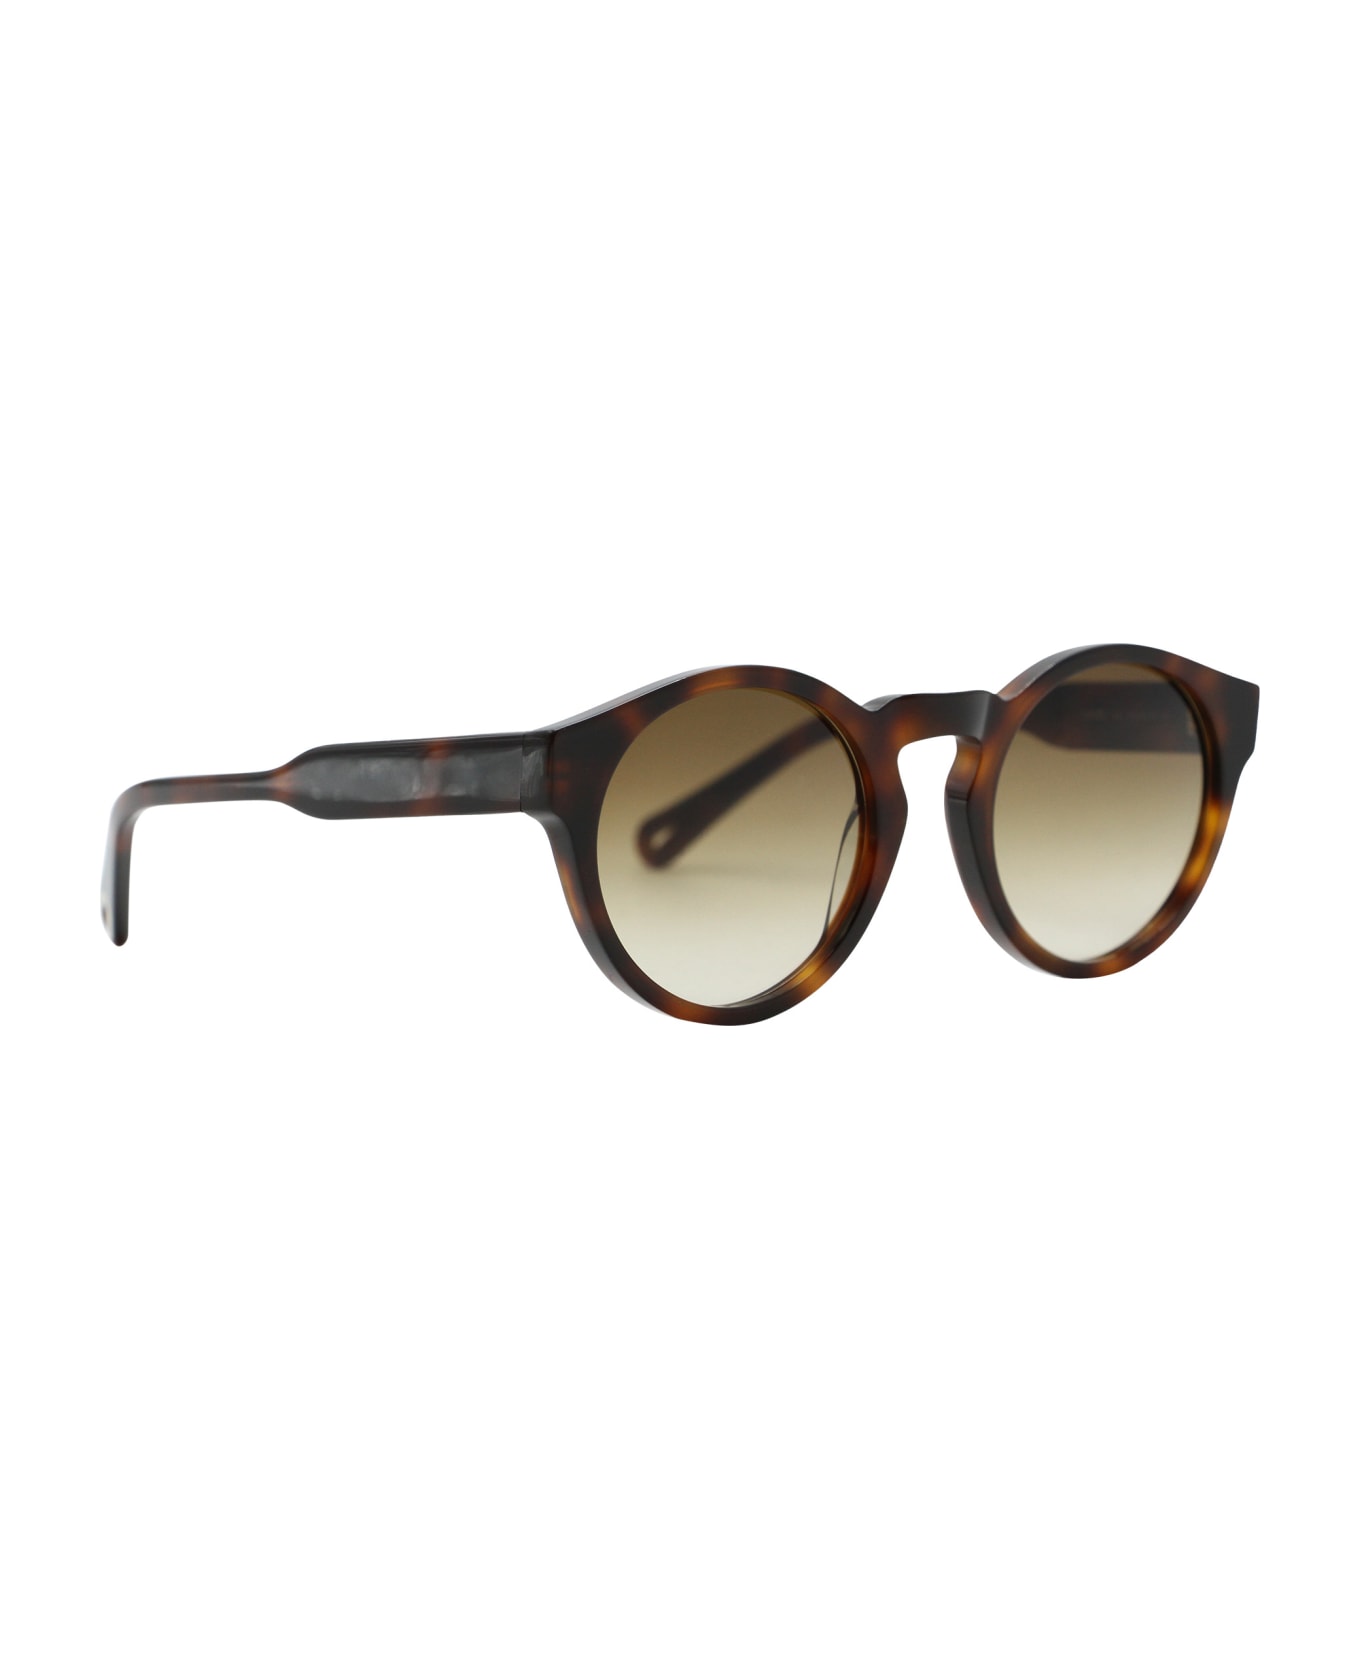 Chloé Round Frame Sunglasses - brown